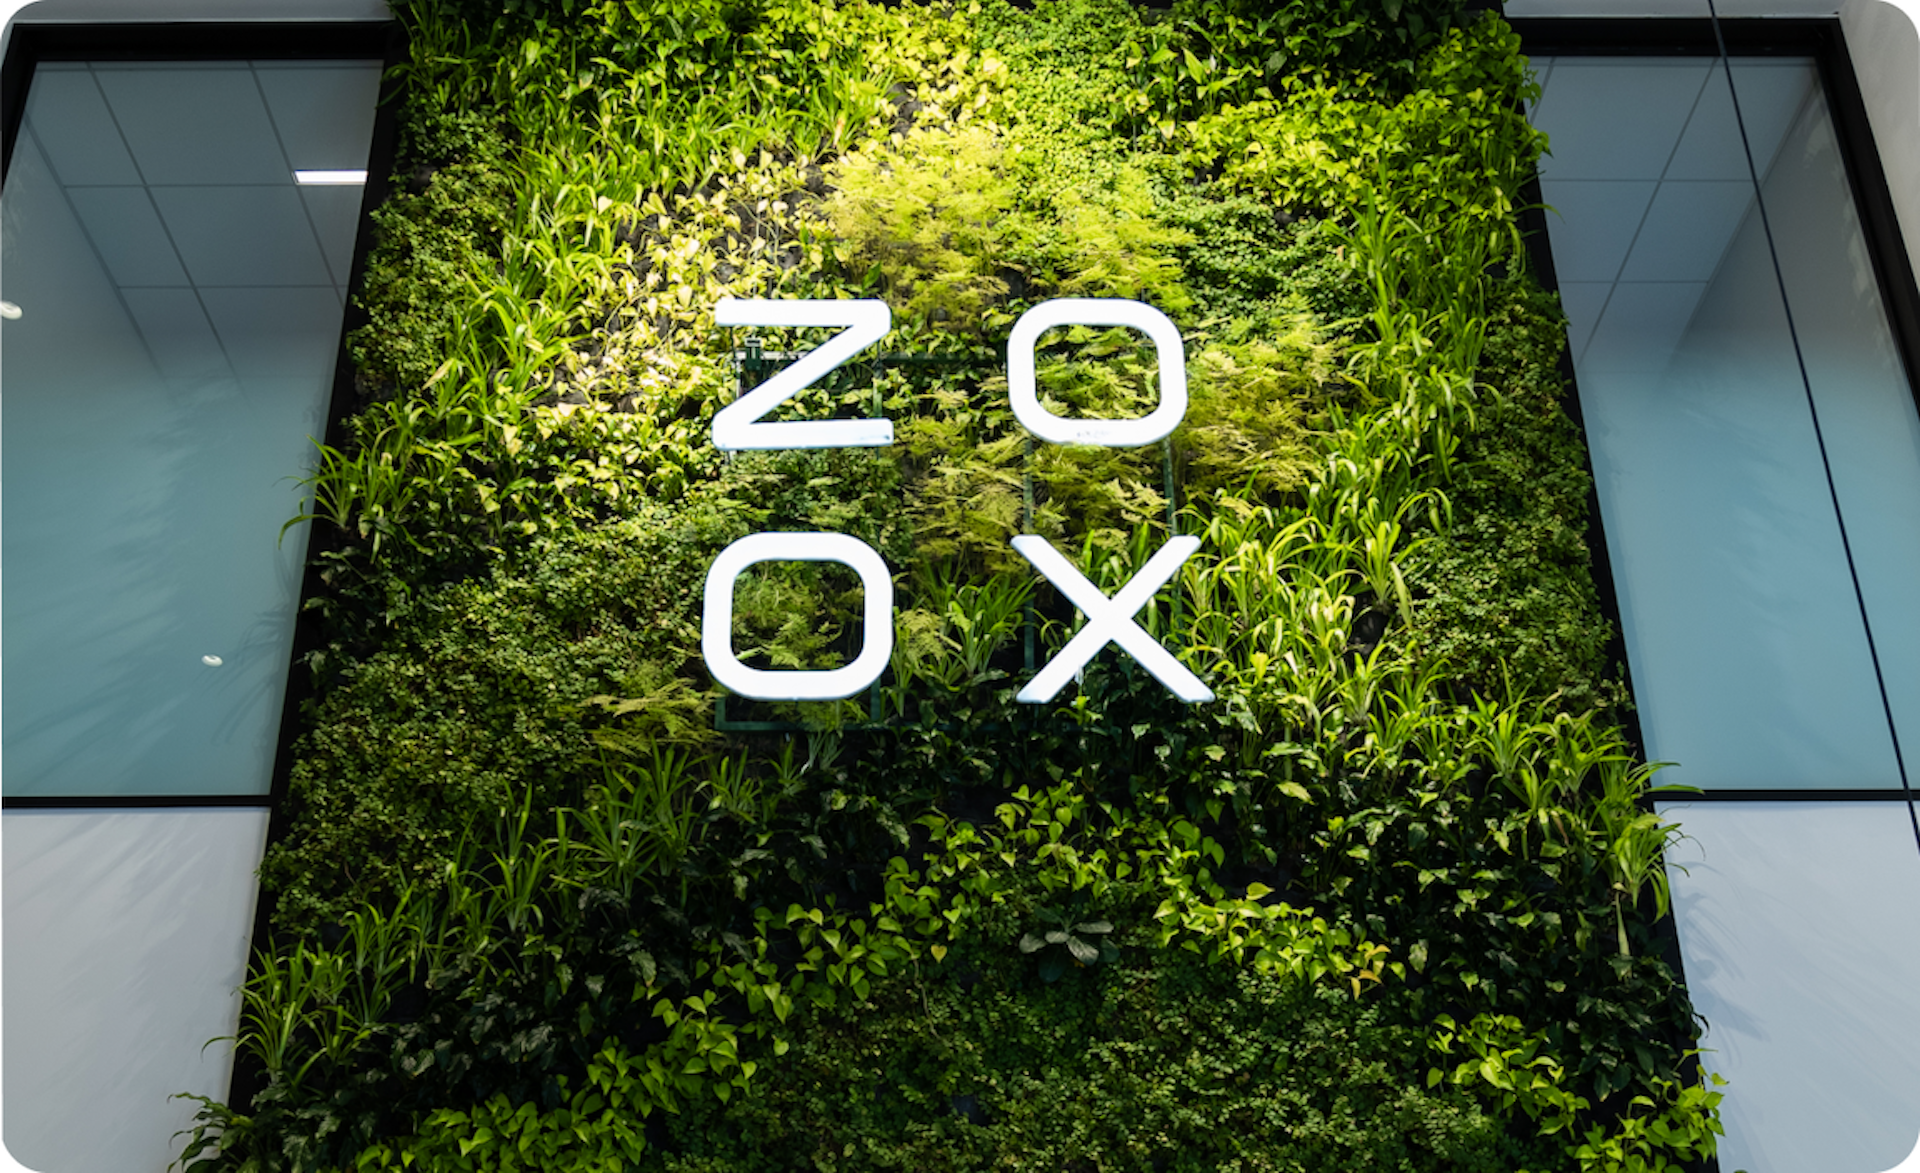 zoox foster city plant wall with zoox logo